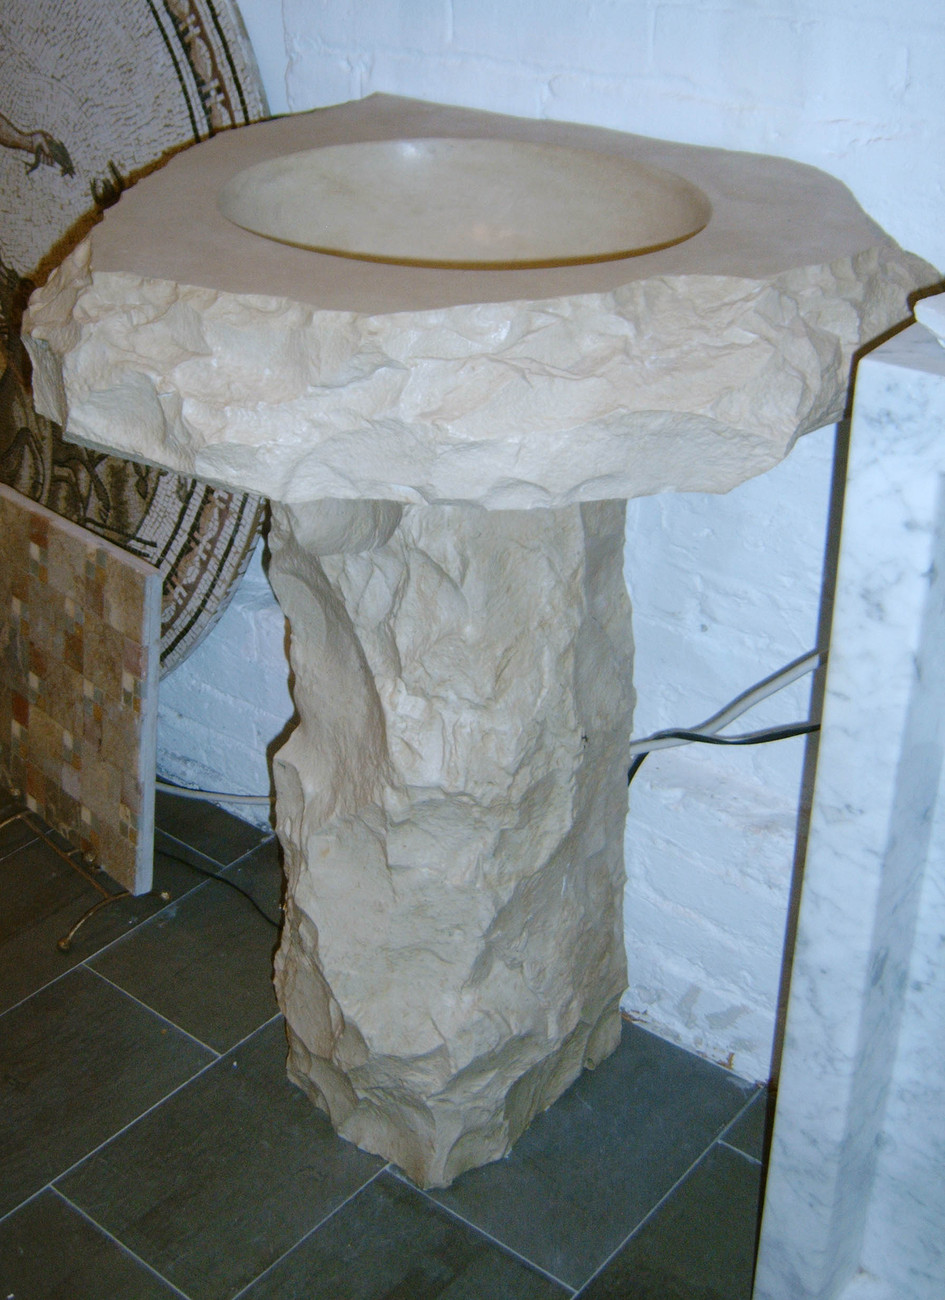 Rustic Beige Limestone Pedestal Sink - $2,500.00